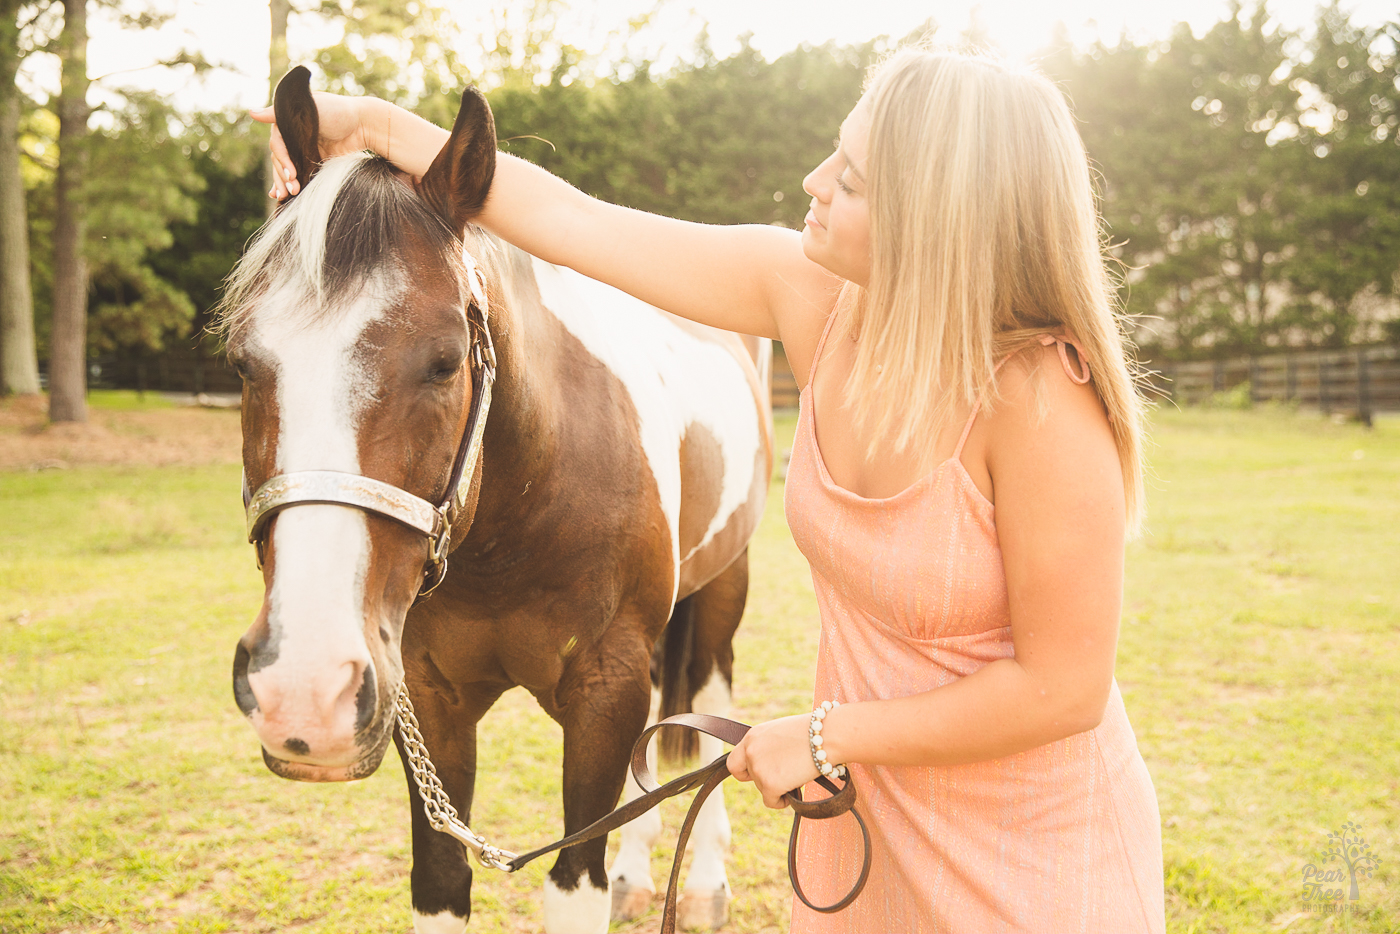 Woodstock high school senior pushing her horse's ears forward